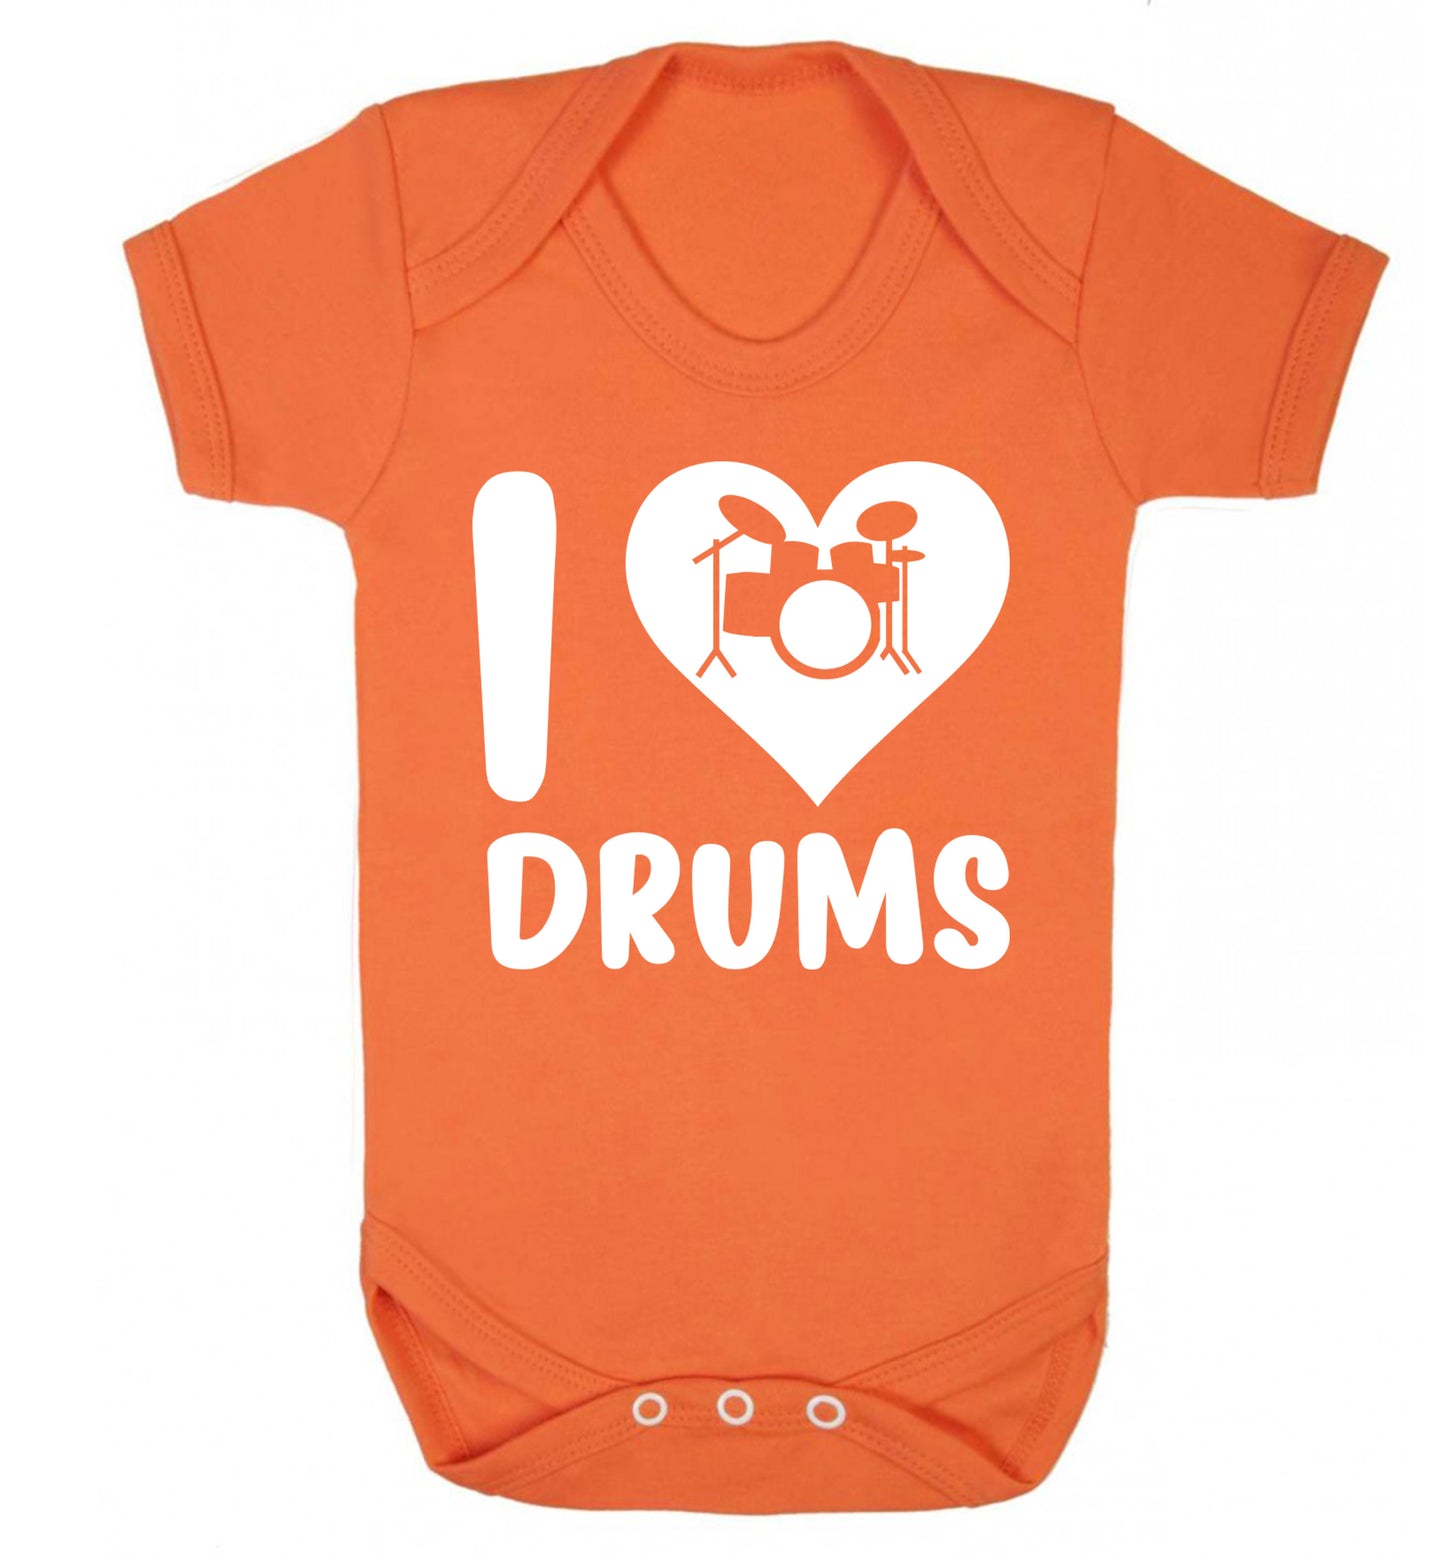 I love drums Baby Vest orange 18-24 months